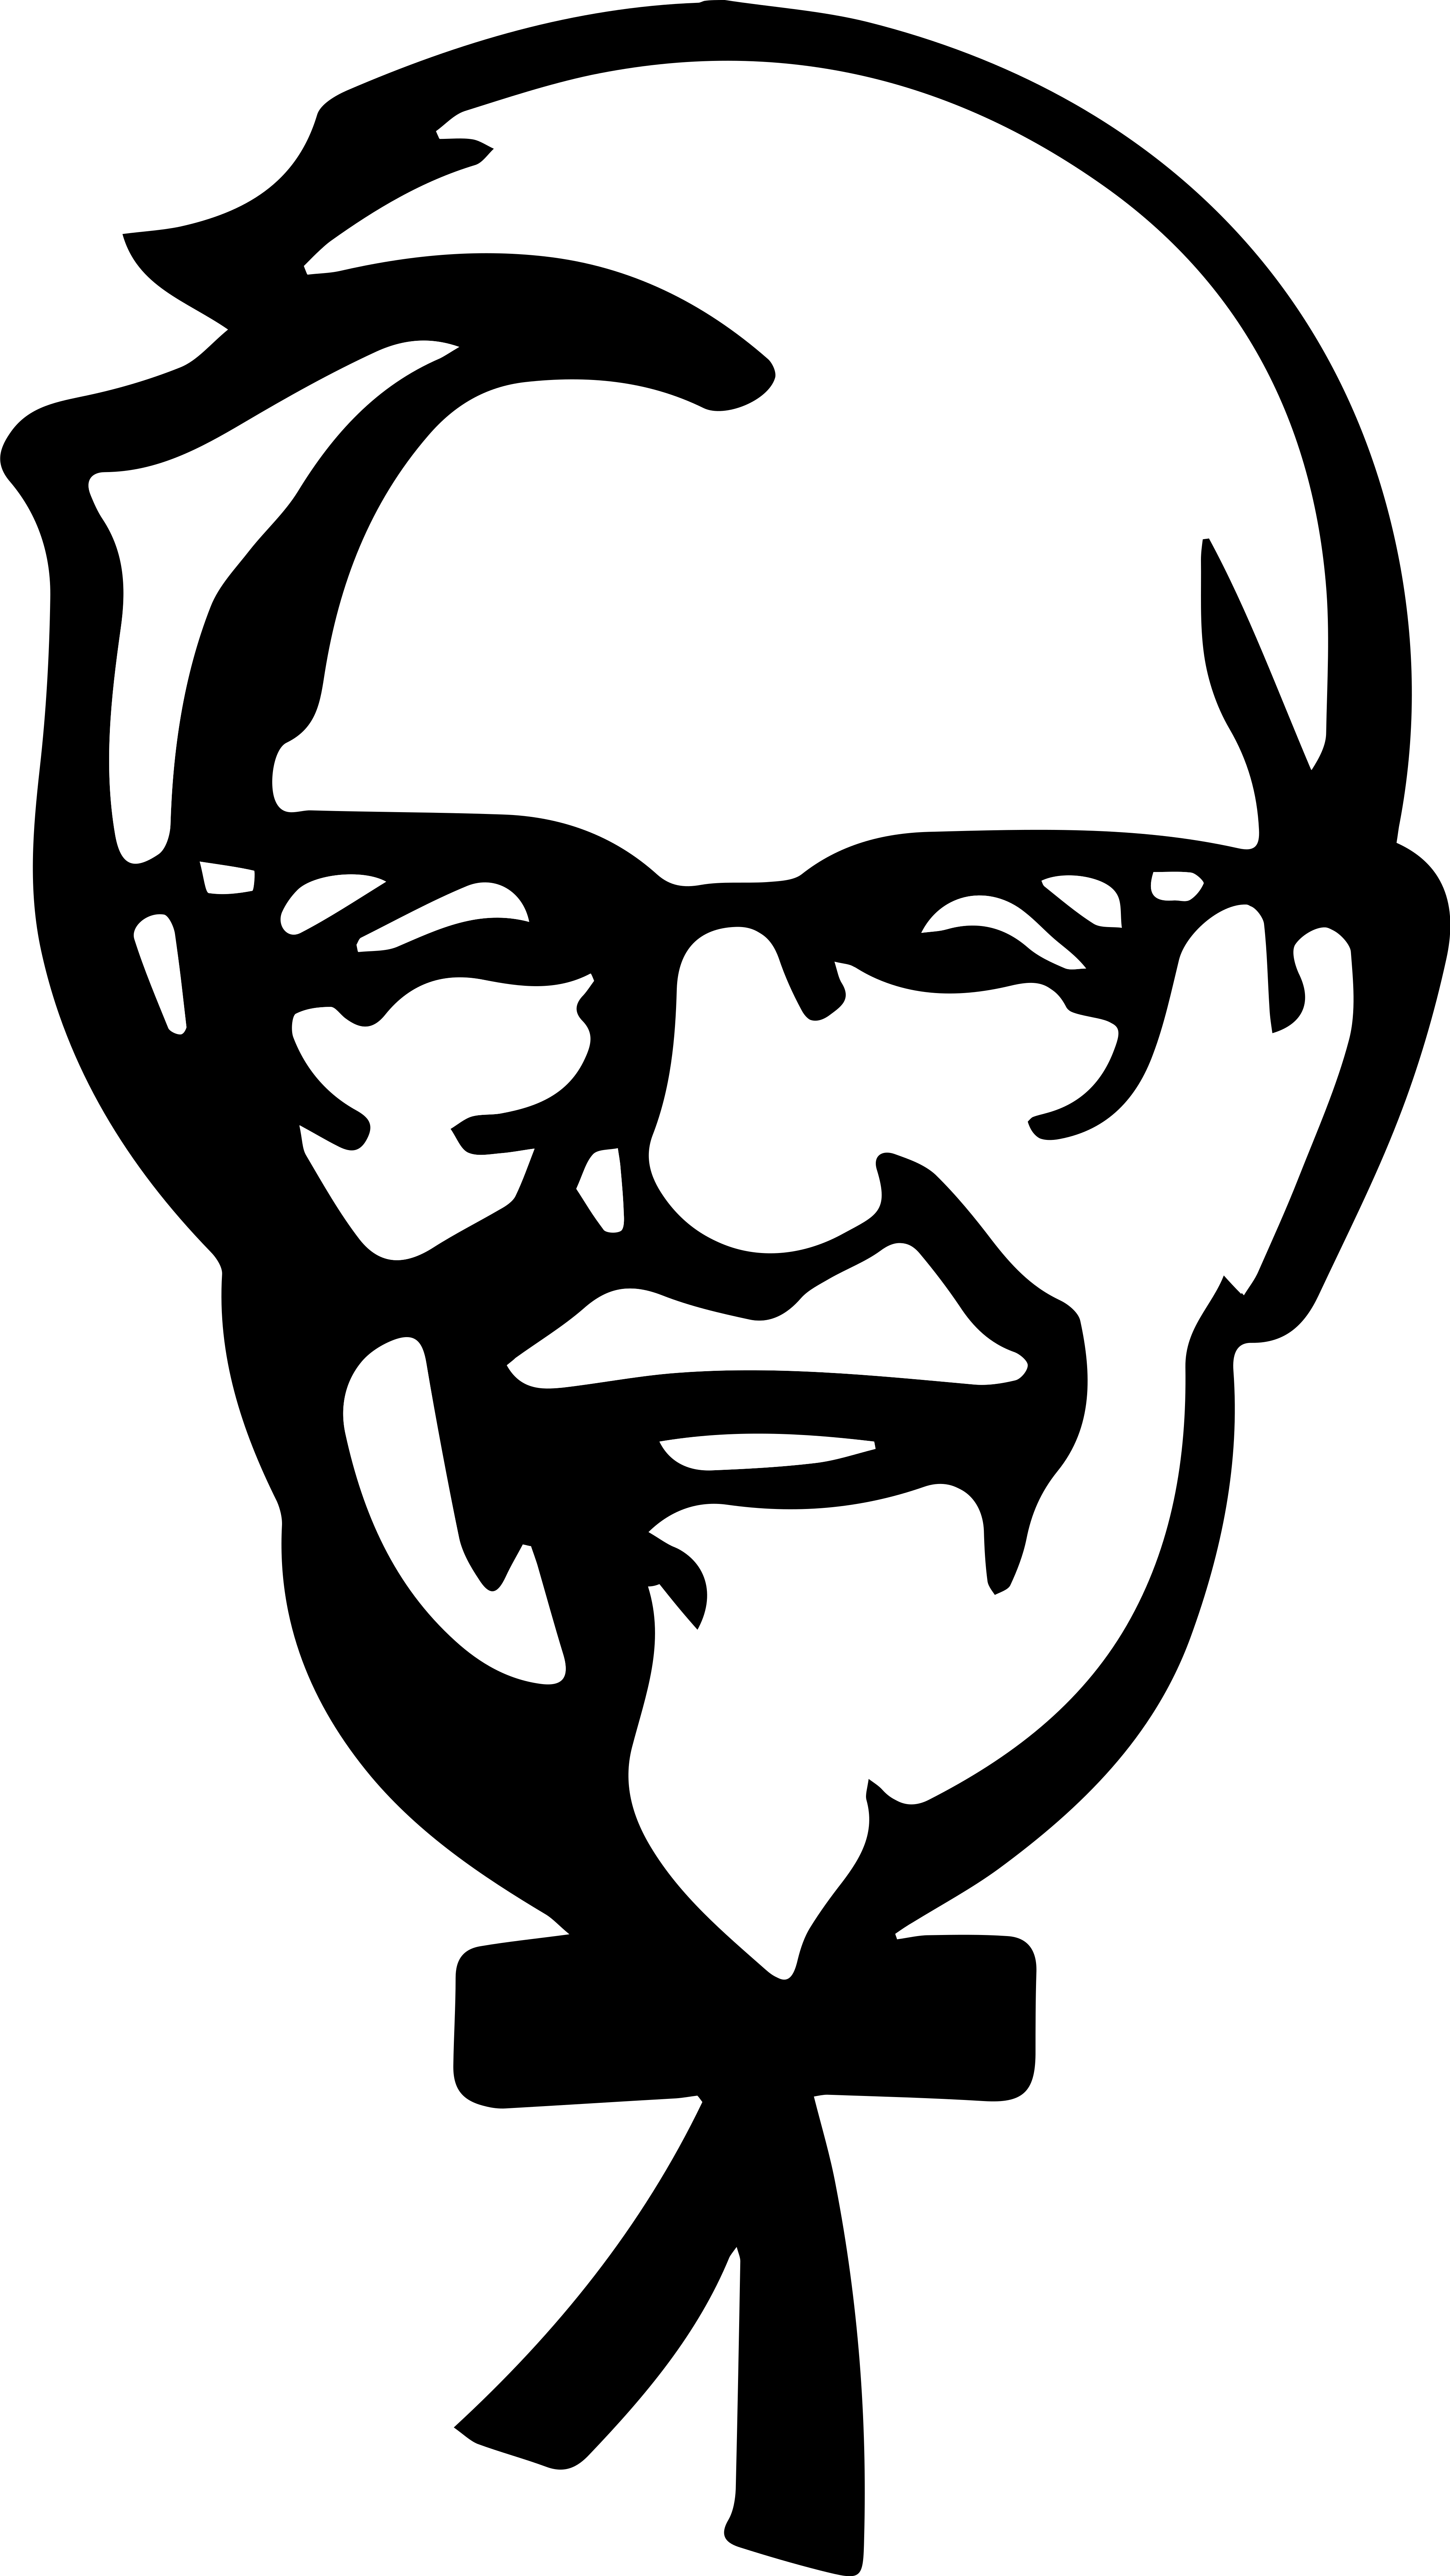 KFC Face logo - download.